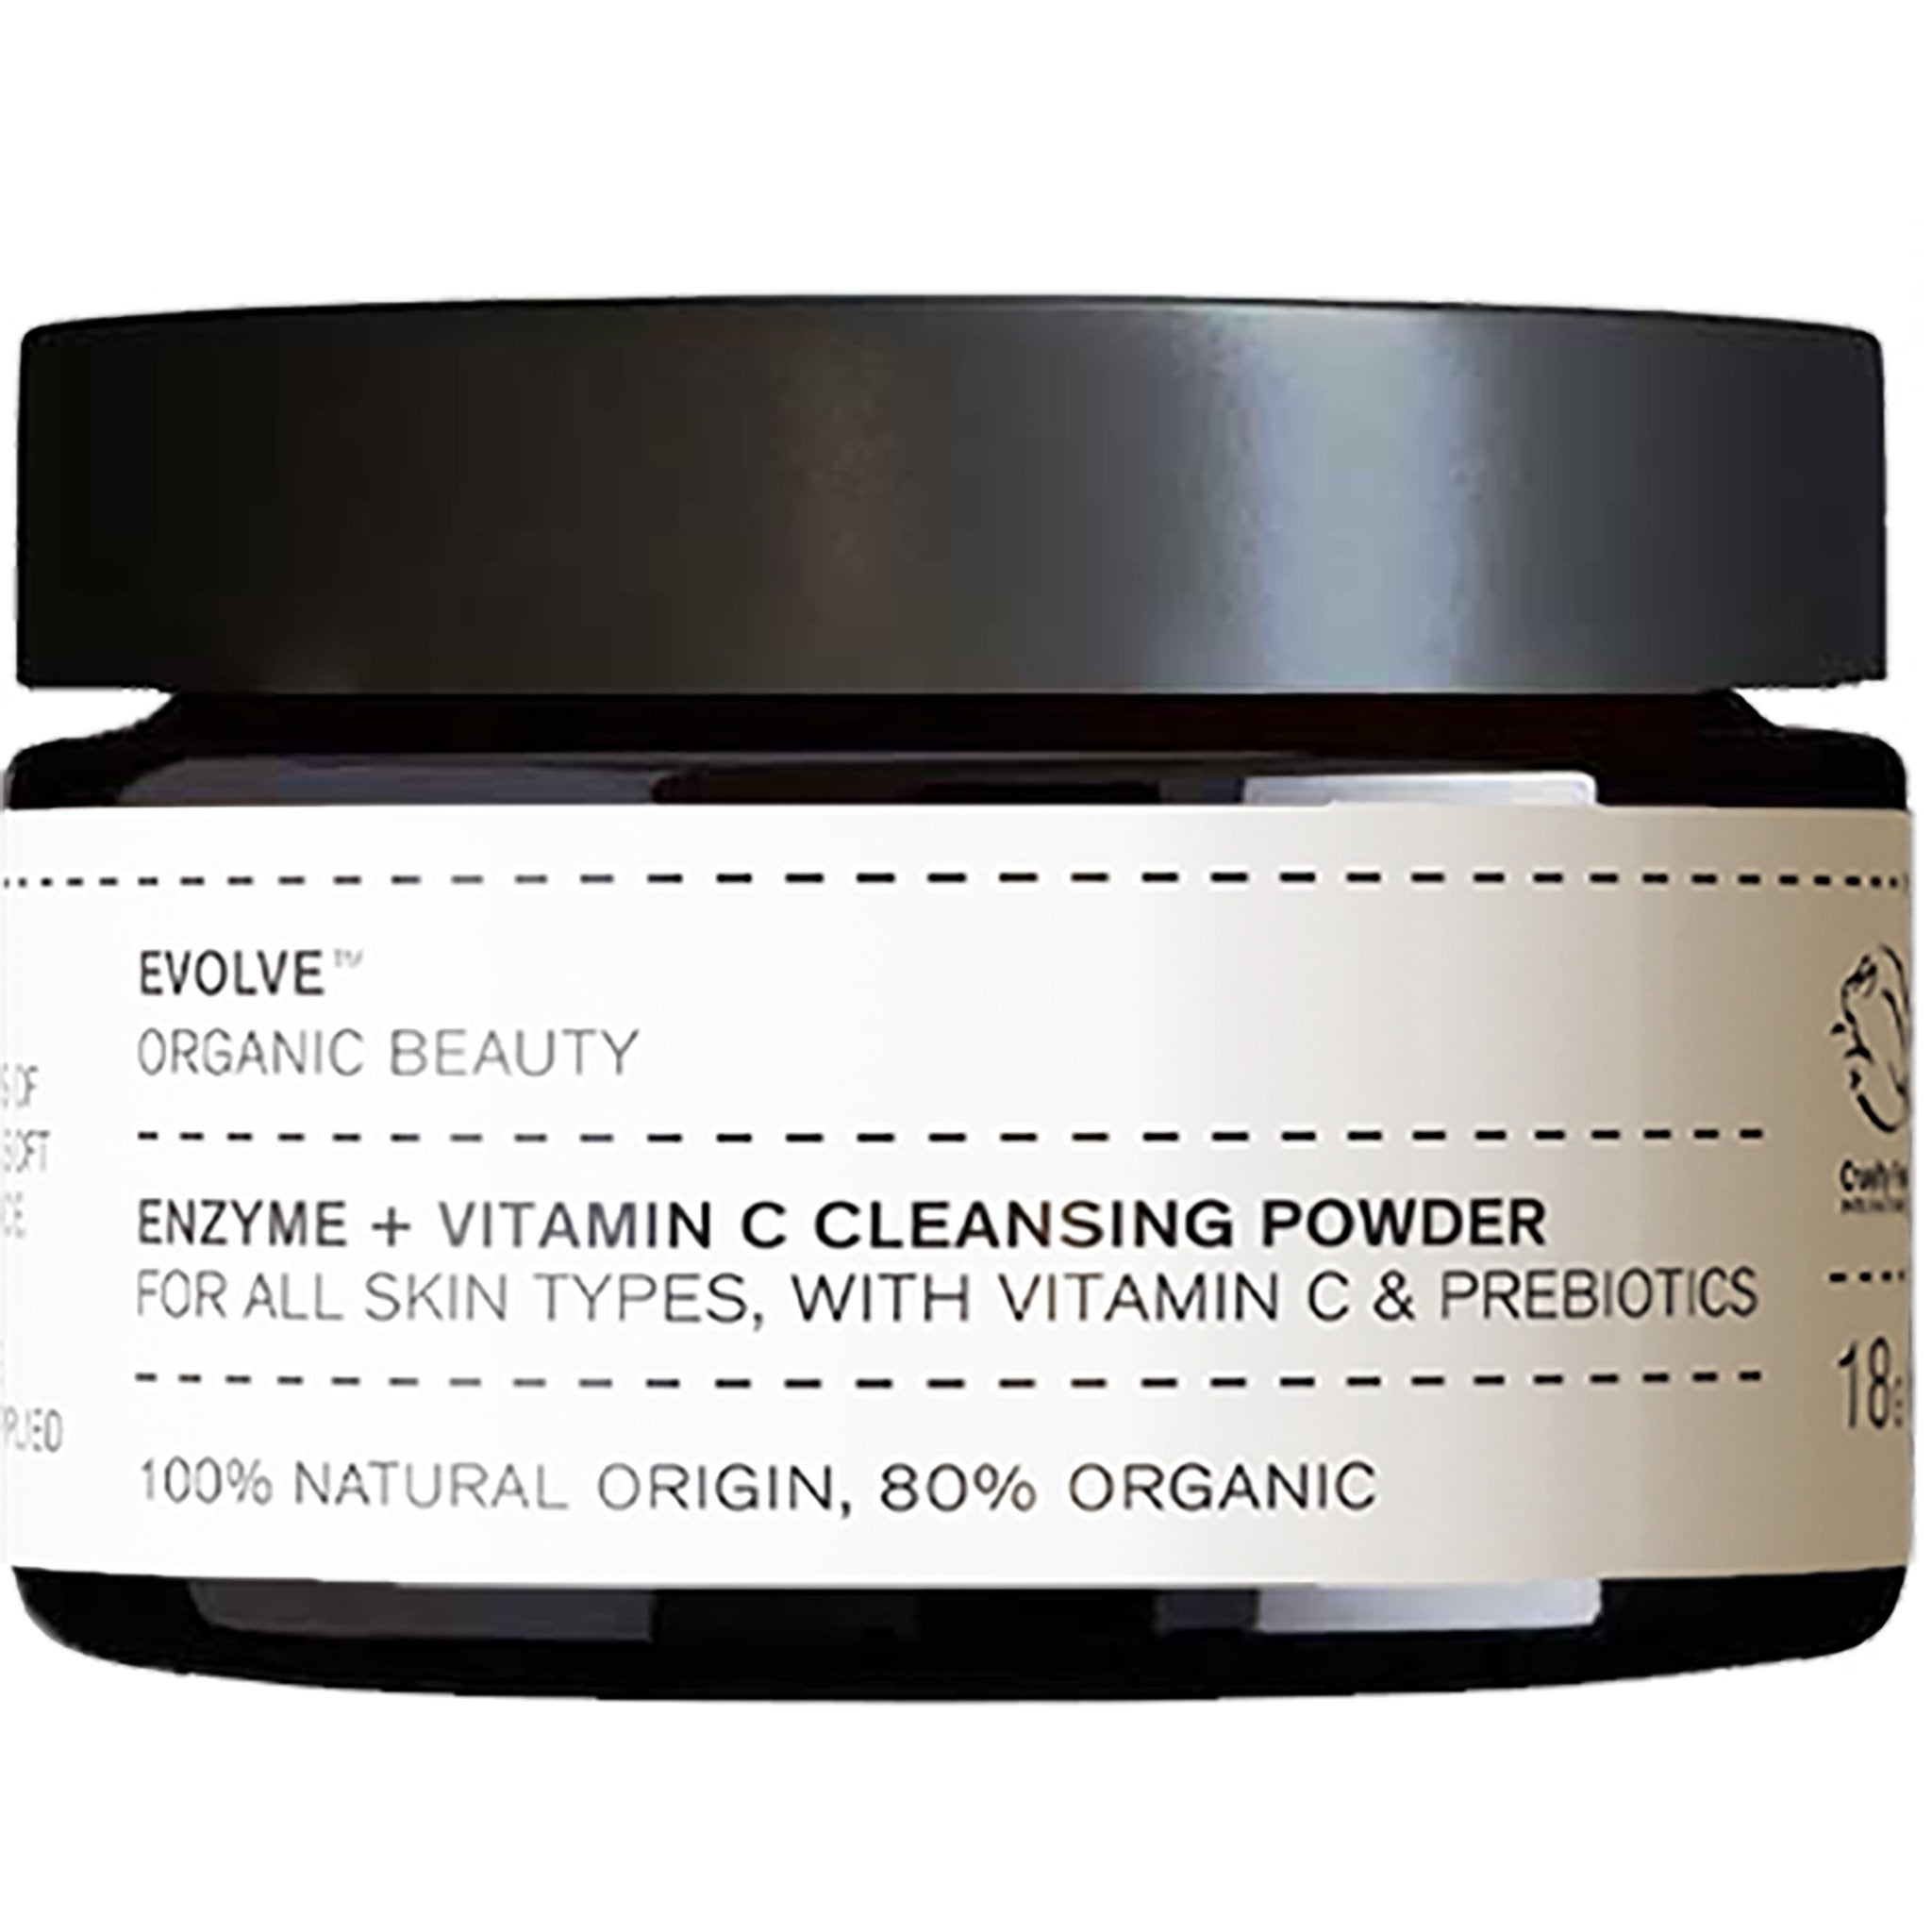 Enzyme + Vitamin C Cleanser Powder - mypure.co.uk